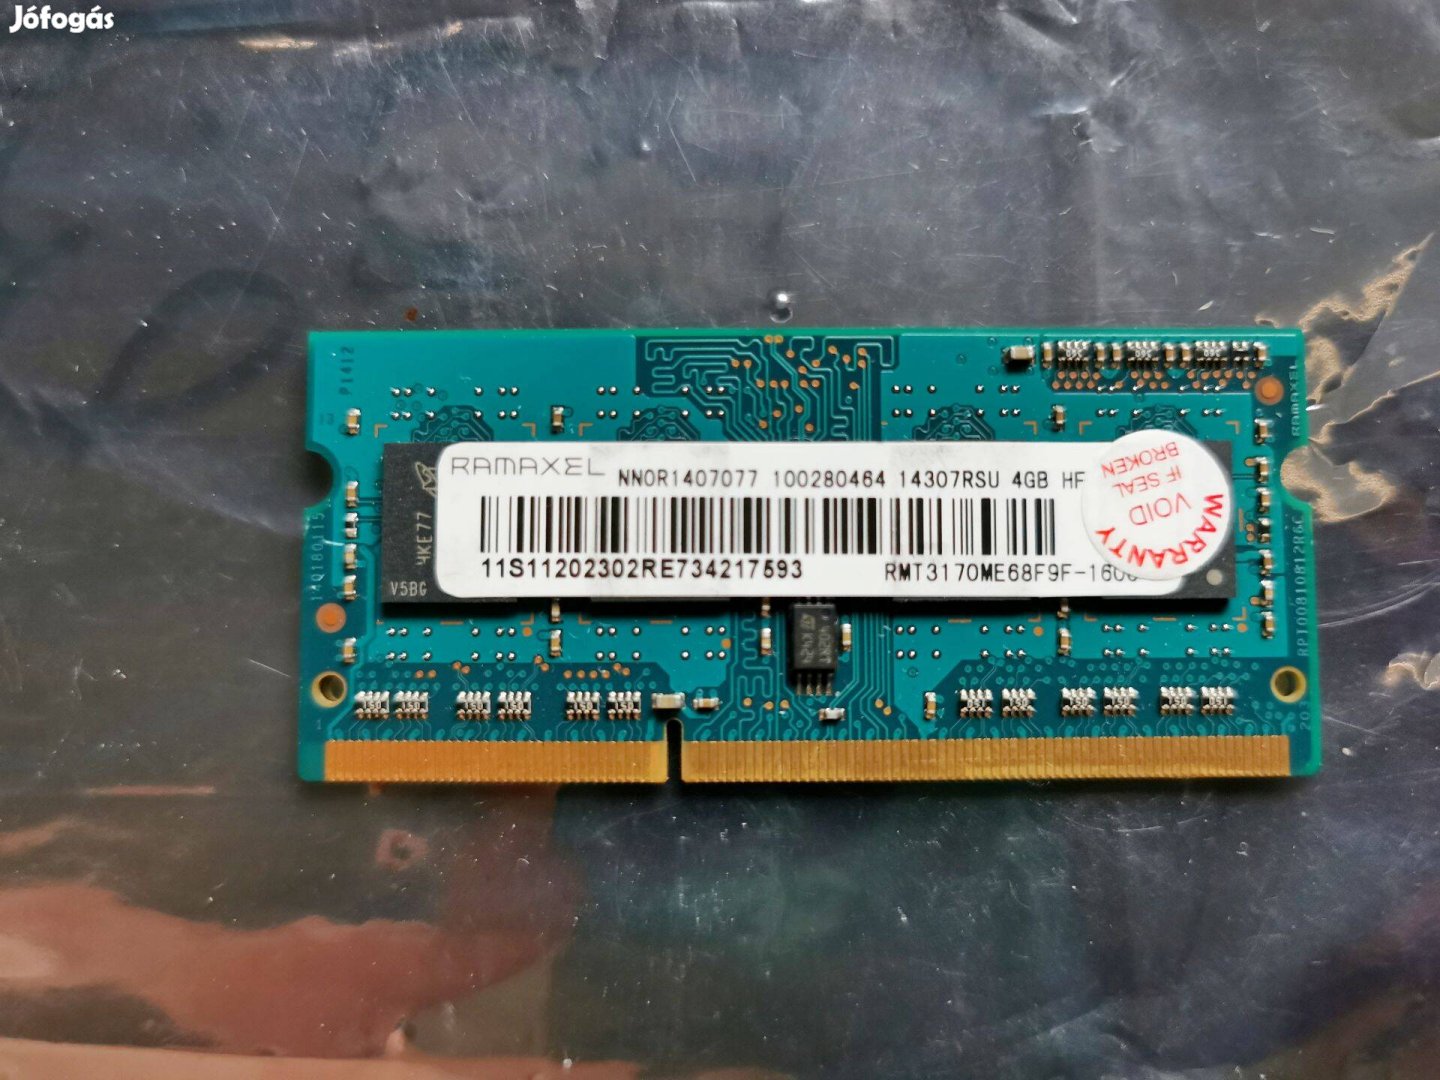 18/1 Remaxel RMT3170ME68F9F 4gb 3 hónap garancia PC3 DDR3 ram memória